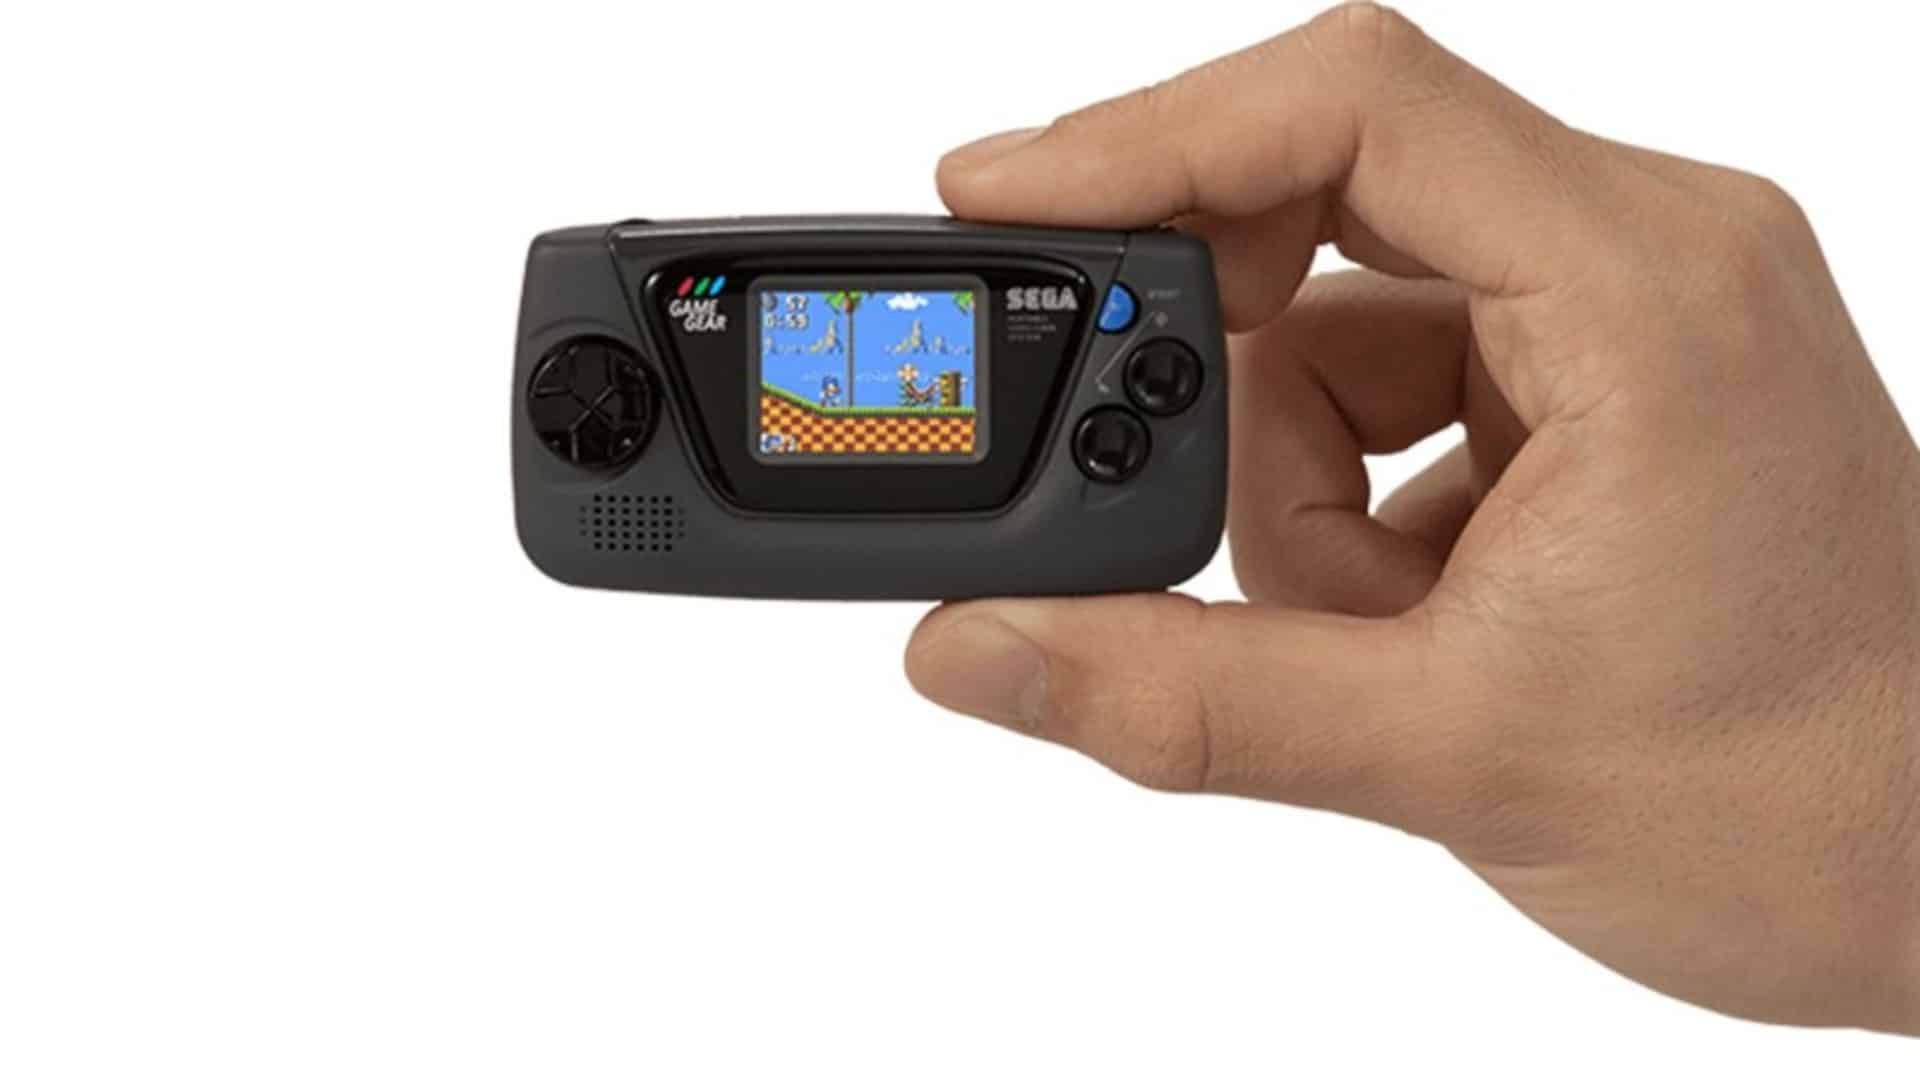 Sega Game Gear Micro